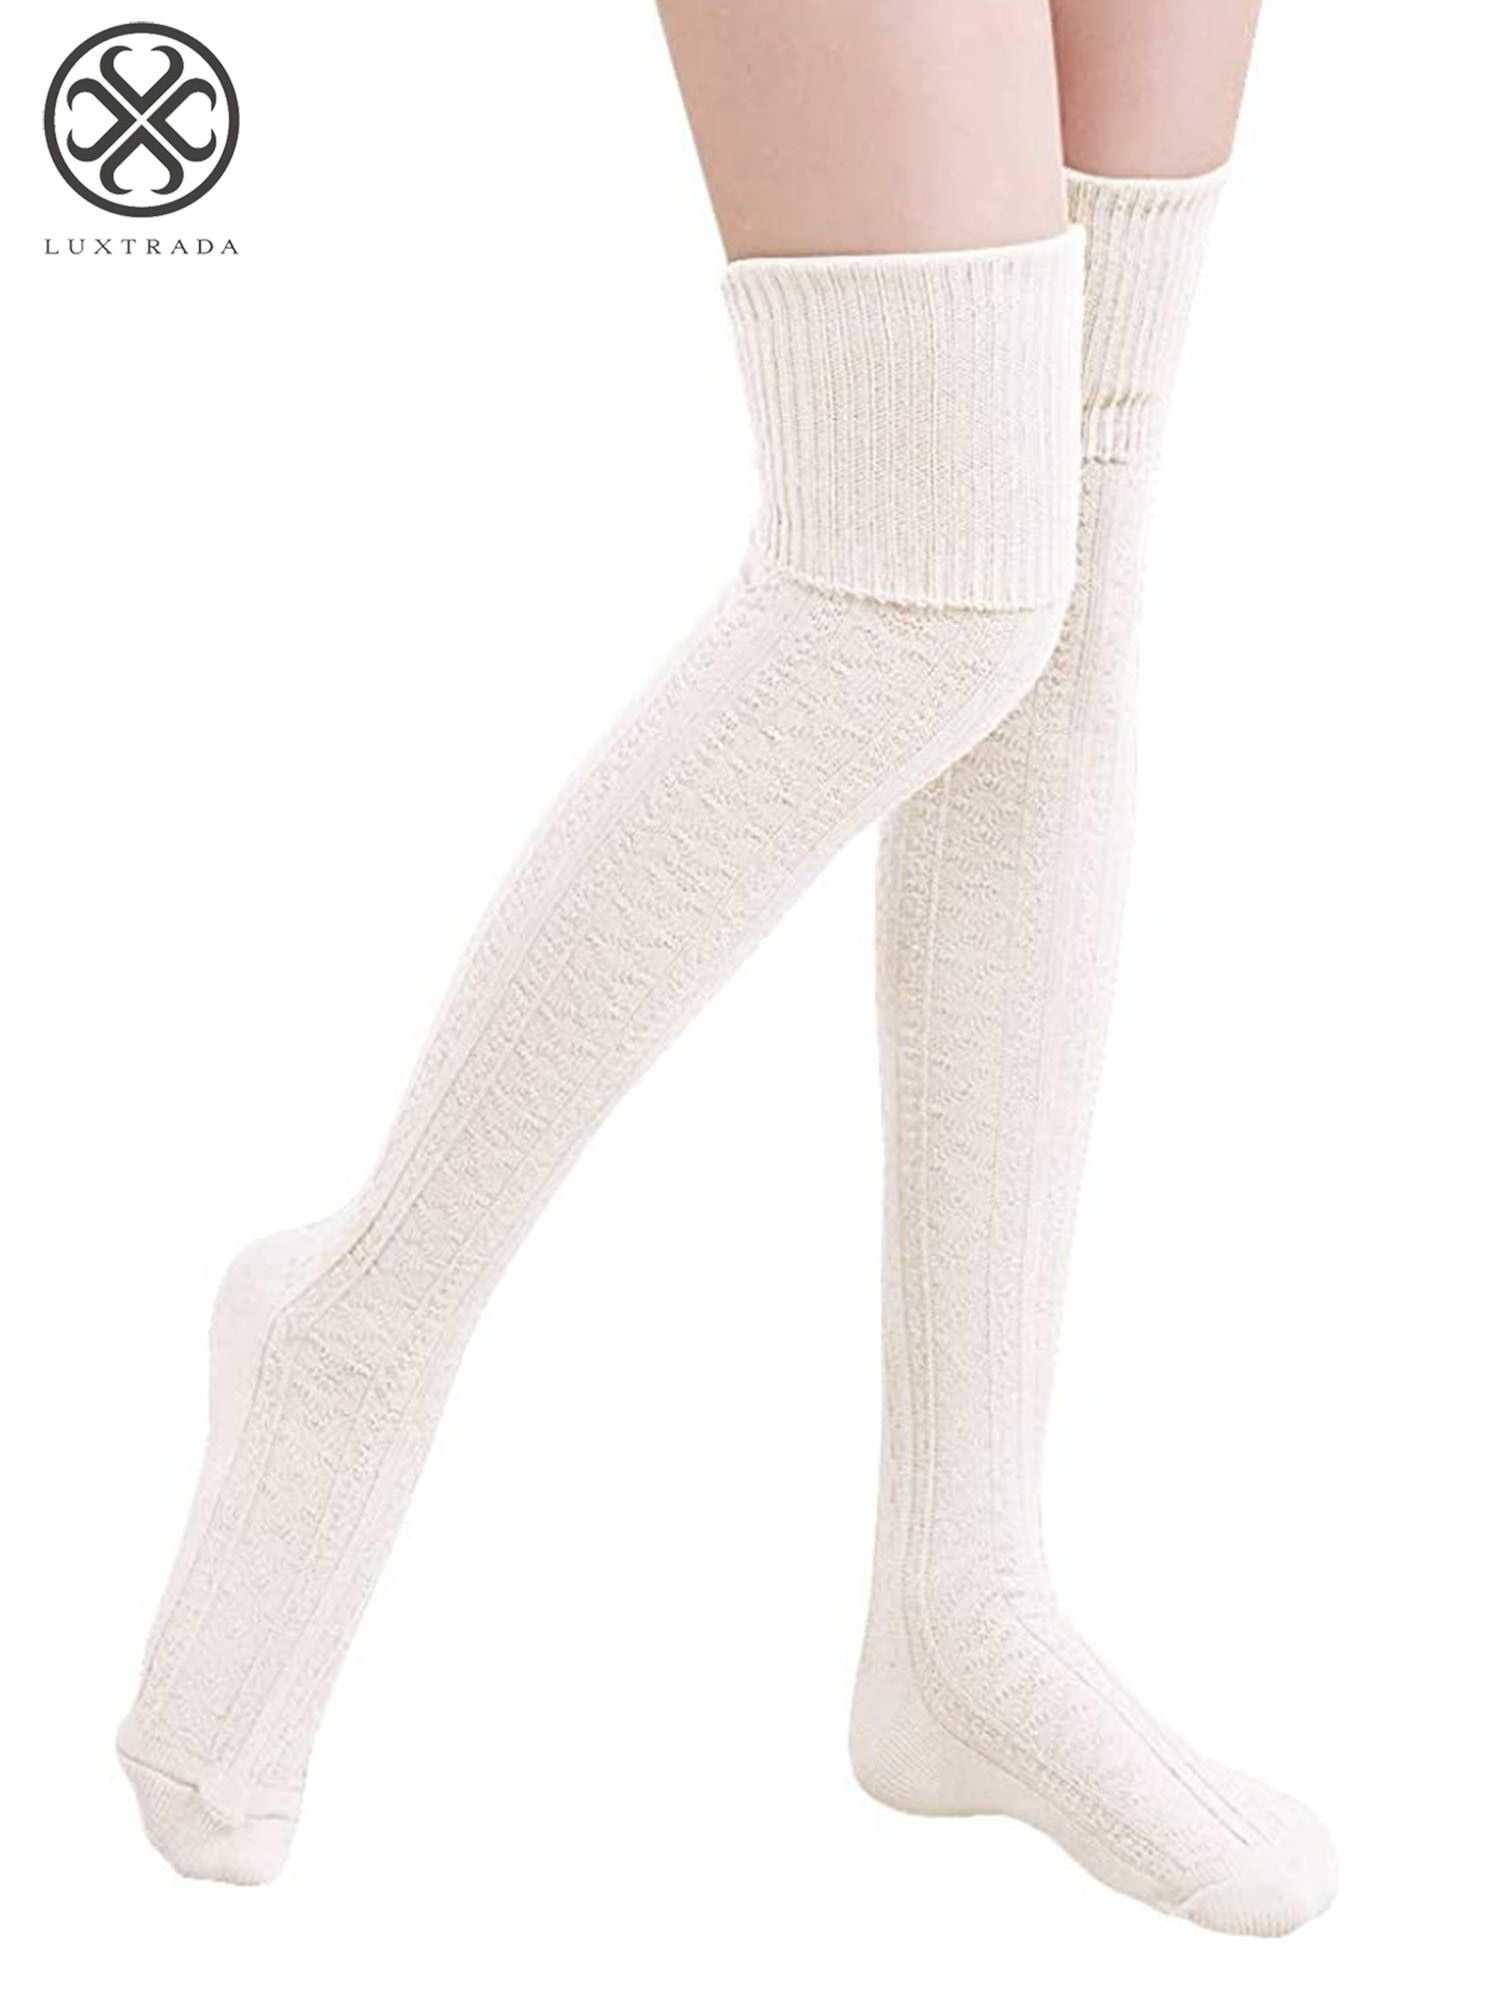 LUOEM 1 Pair Short Button Socks Leg Warmers Socks Knit Boots Set Women Female Free Size Light Gray 